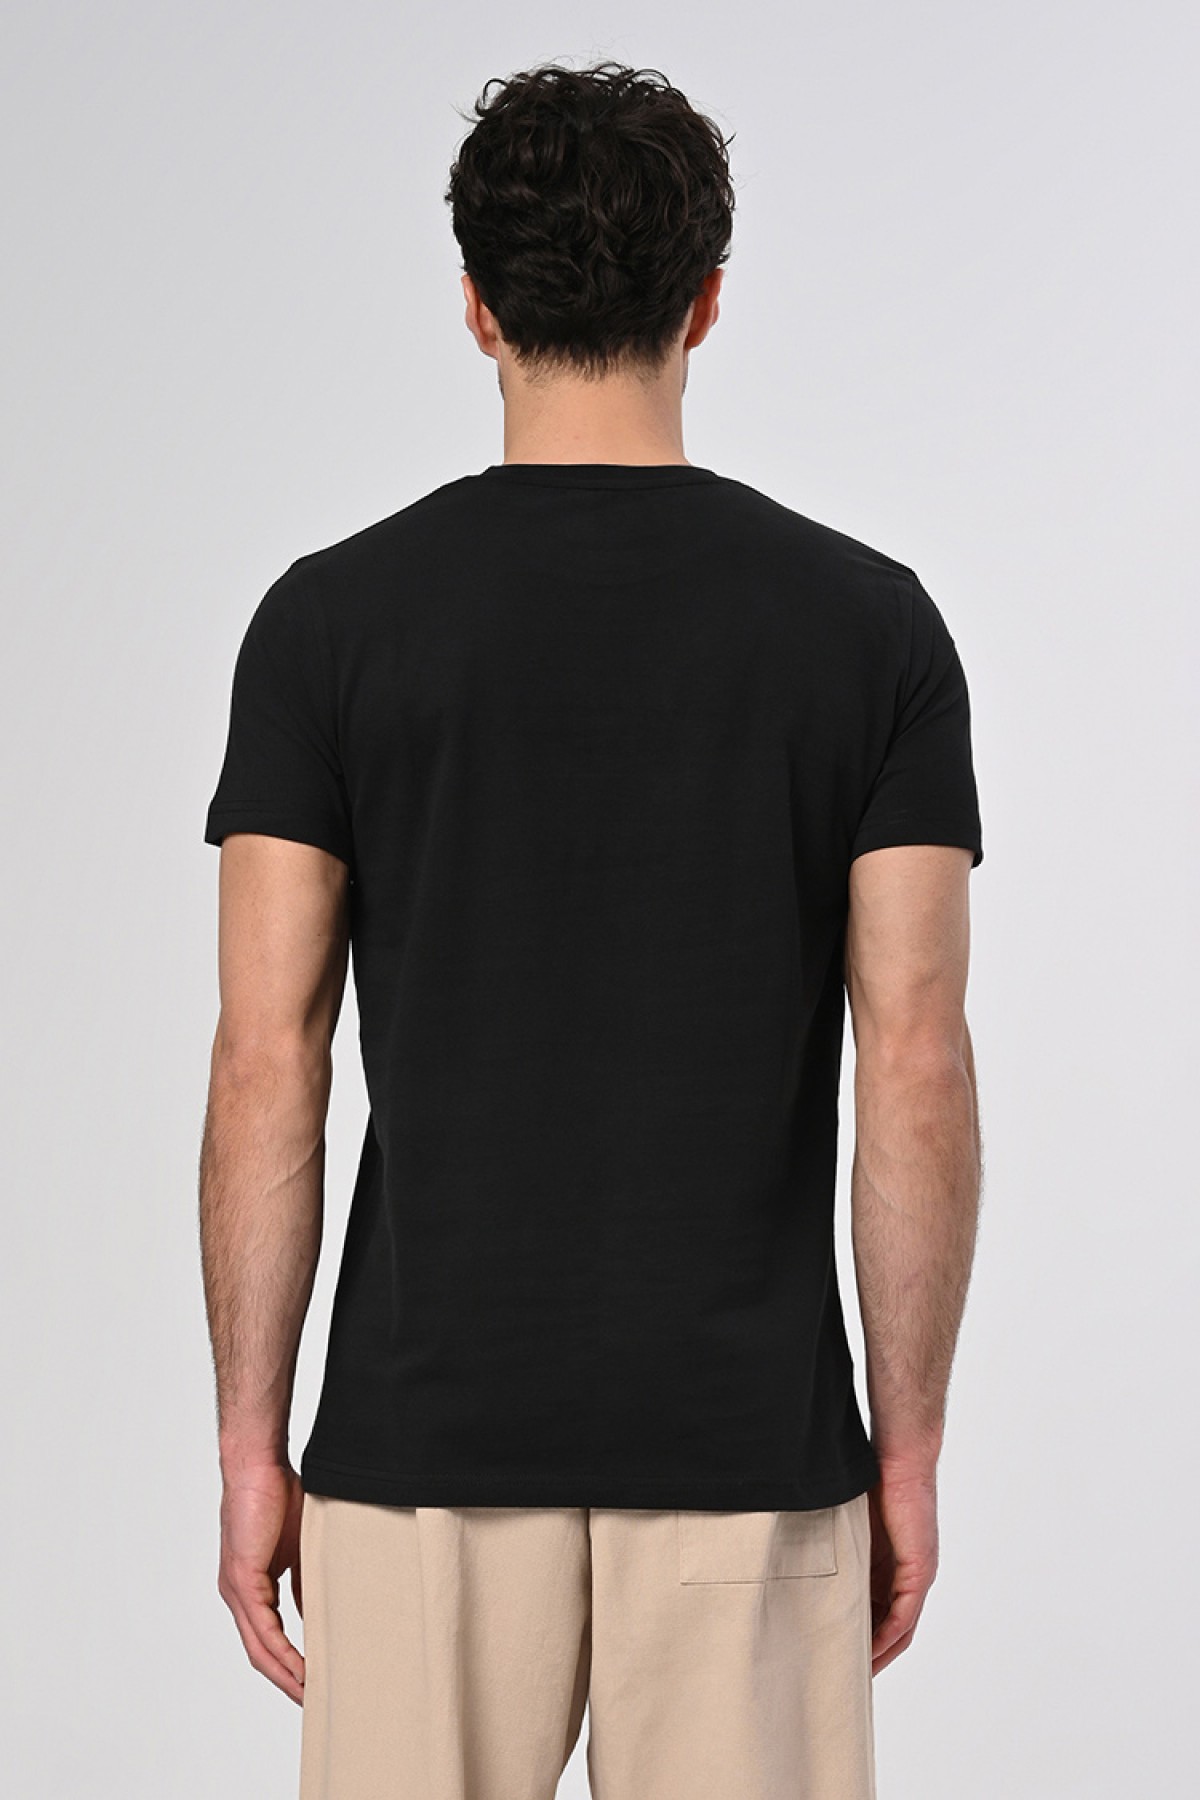 Aziz İstanbul Tasarım Pamuk Bisiklet Yaka Siyah T-shirt 22’